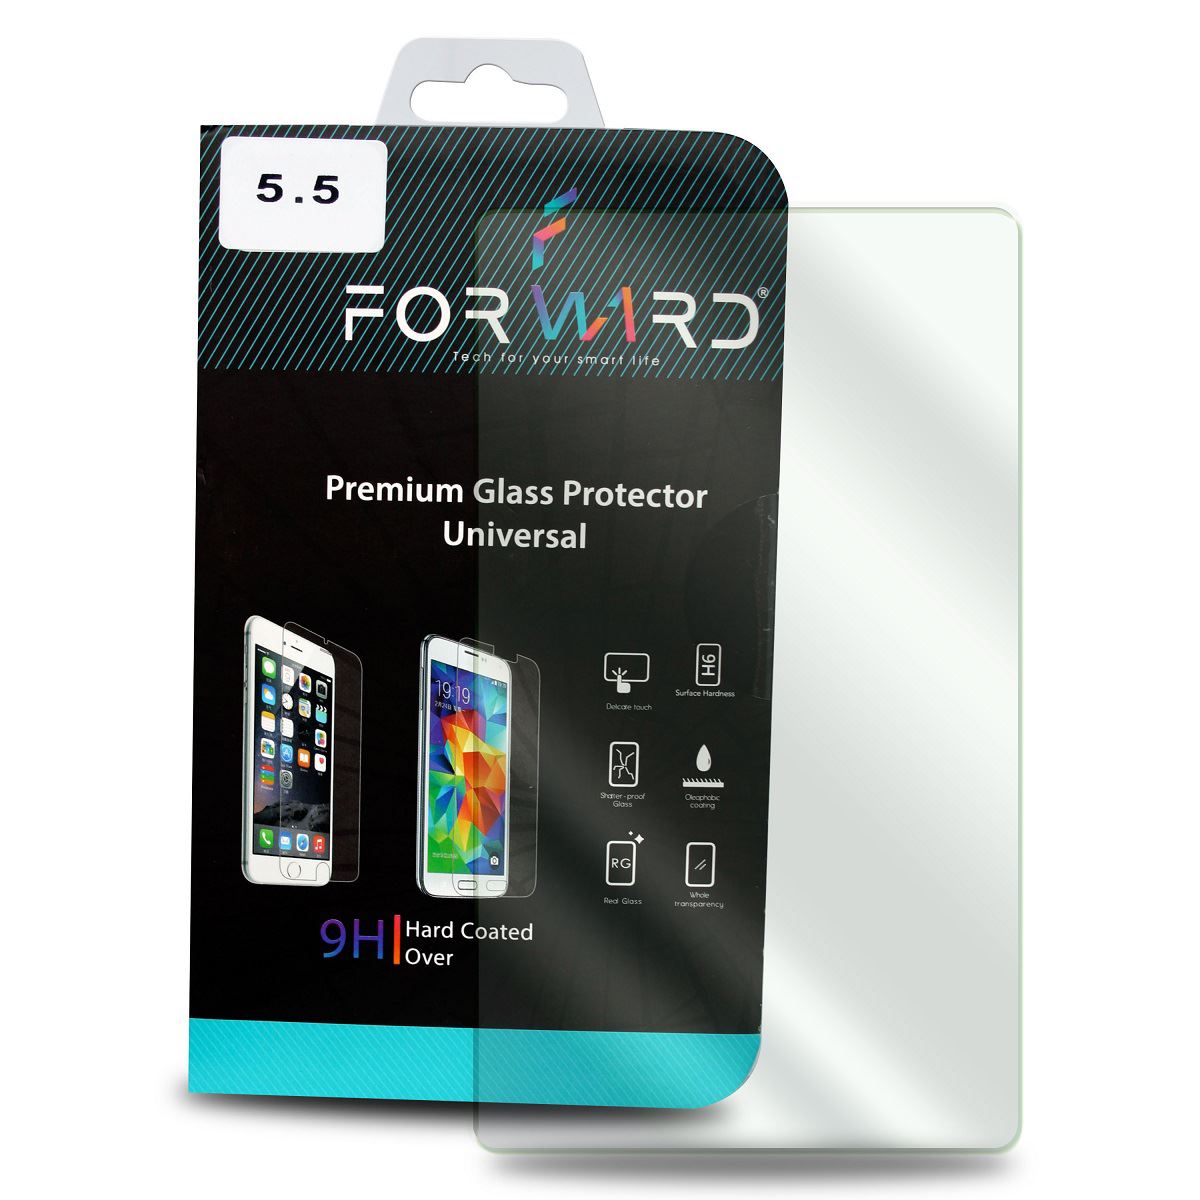 Protector Universal H9 para pantallas de 5.5 pulgadas